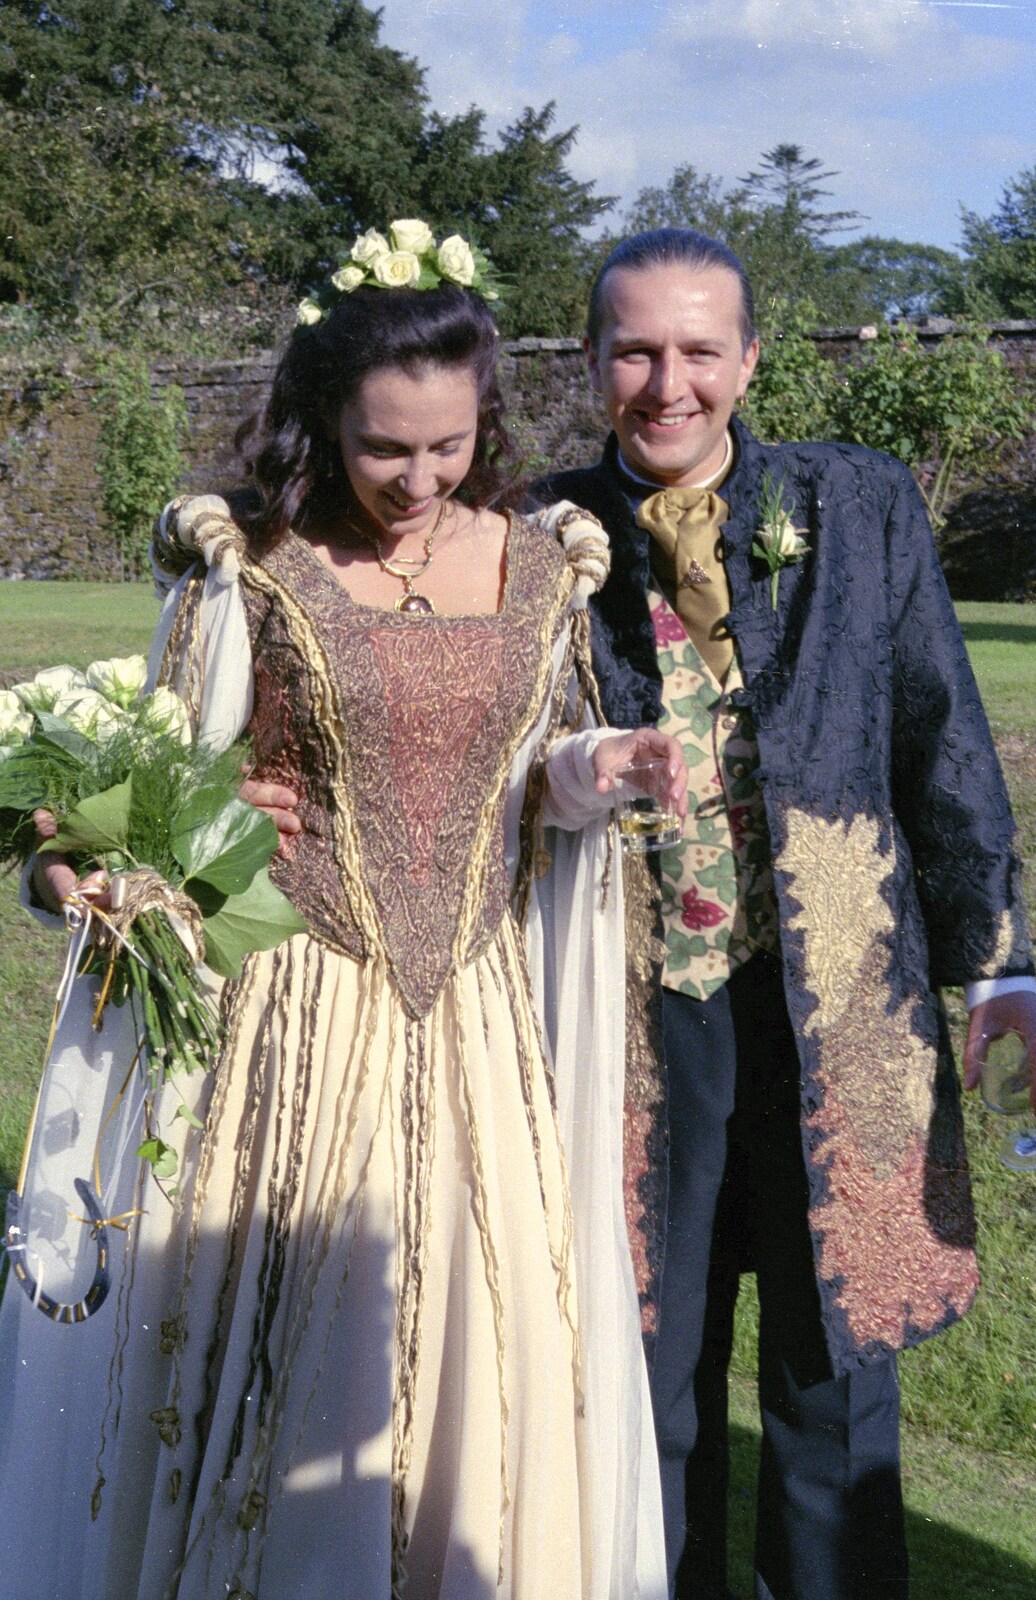 Stuart and Sarah's CISU Wedding, Naworth Castle, Brampton, Cumbria - 21st September 1996: Sarah and Stuart in the garden